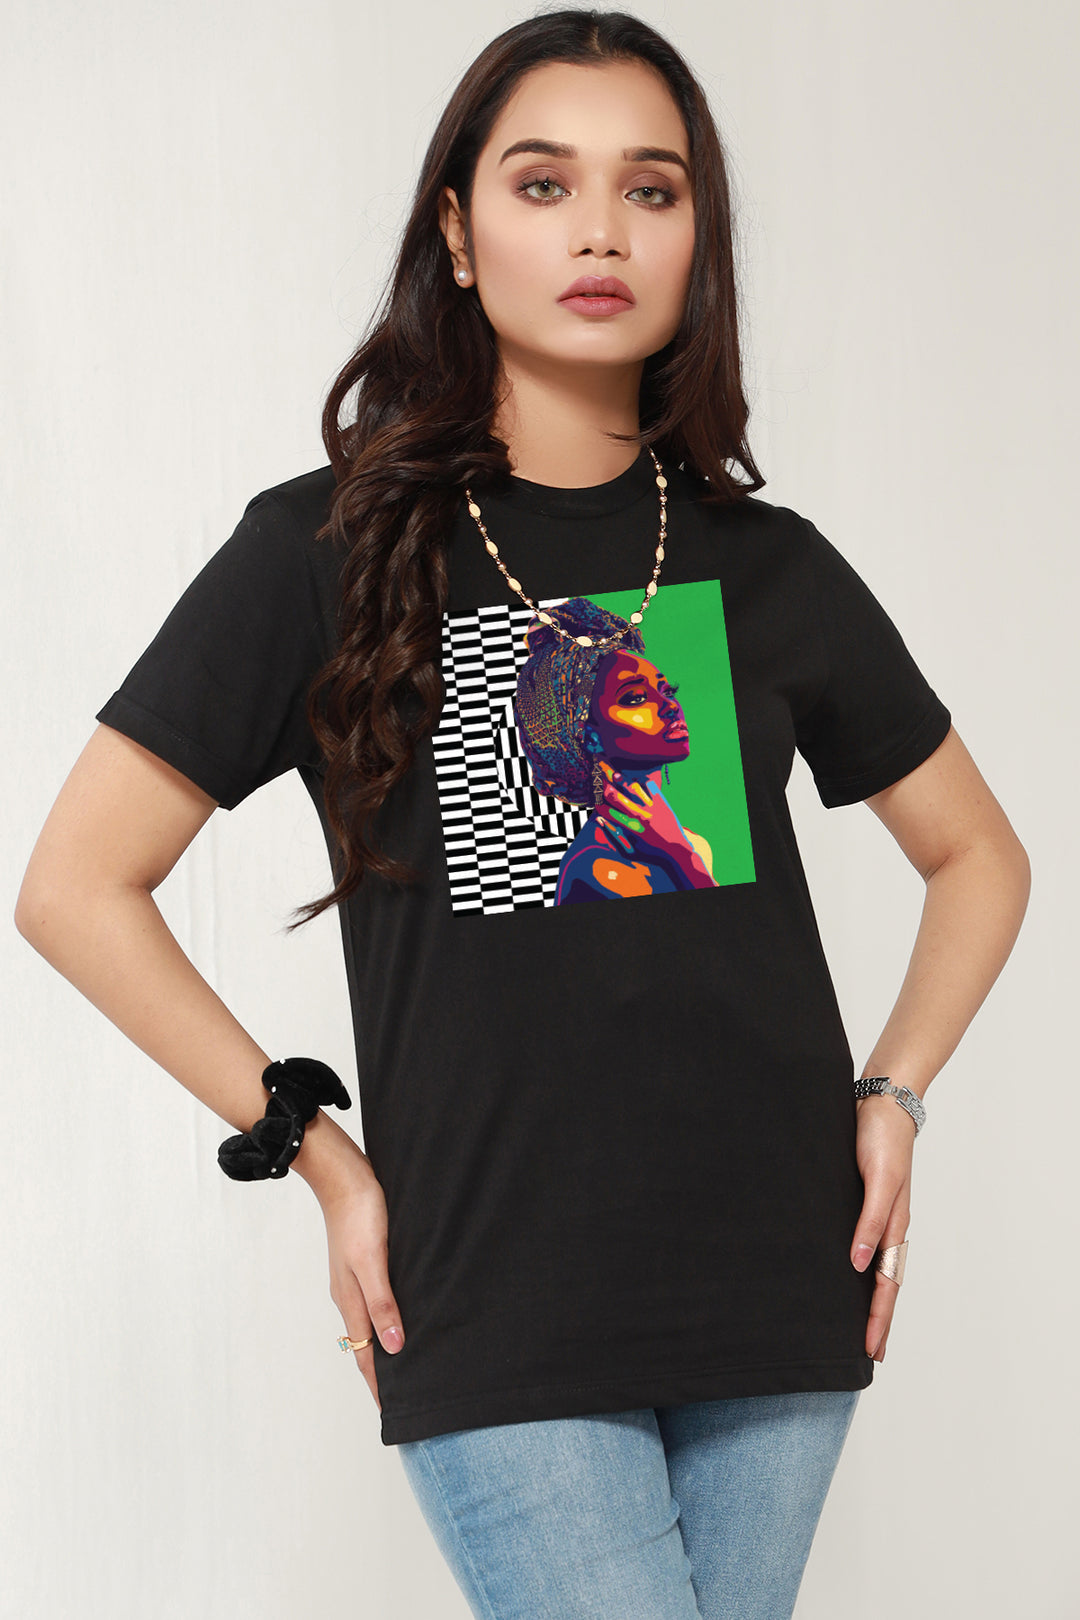 Womens Graphic T-shirt Online Pakistan